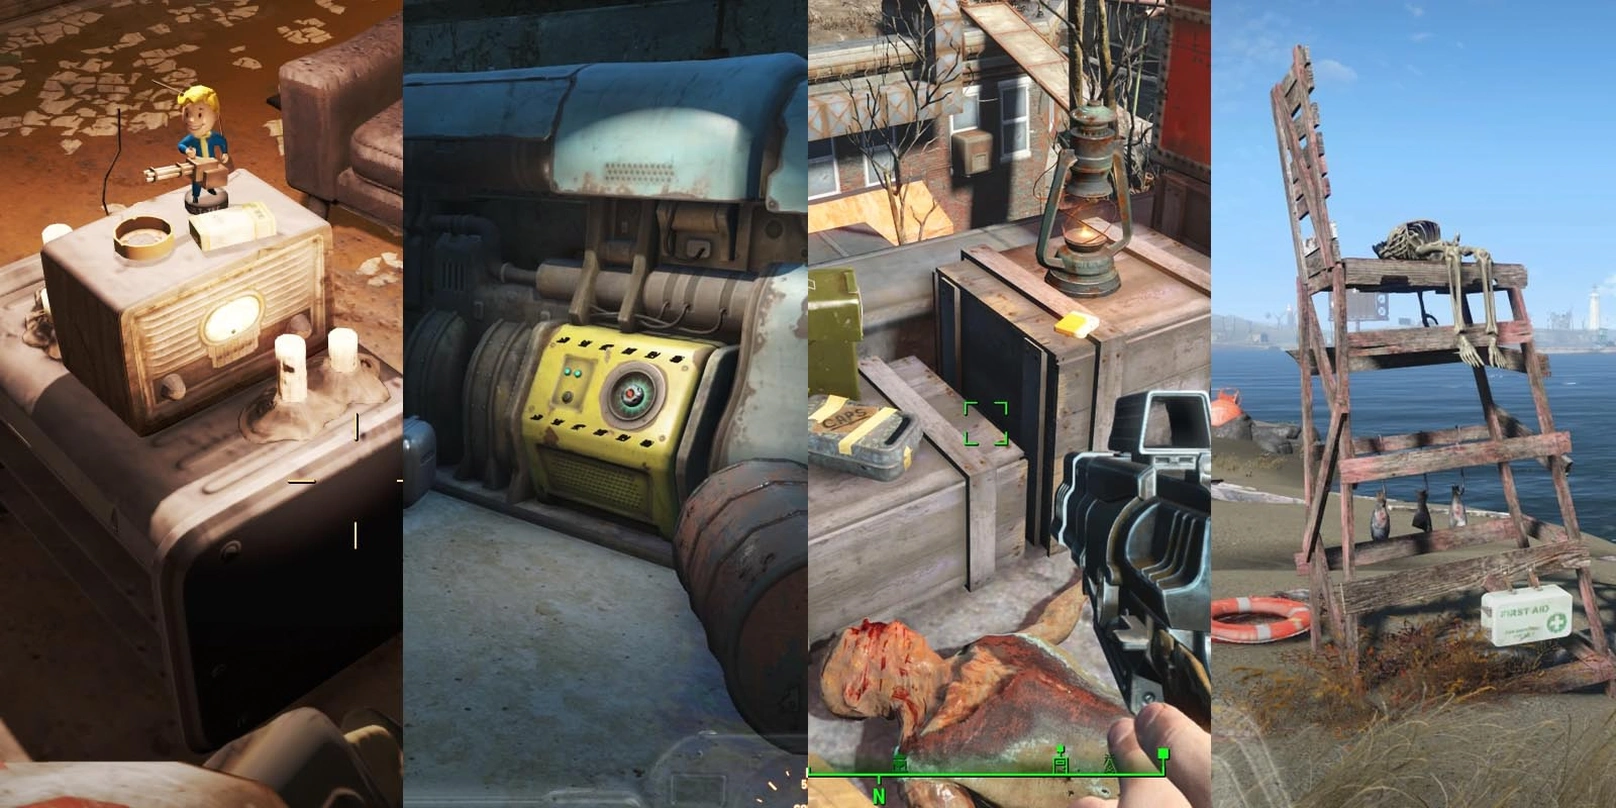 [Fallout 4] Привлечение внимания.